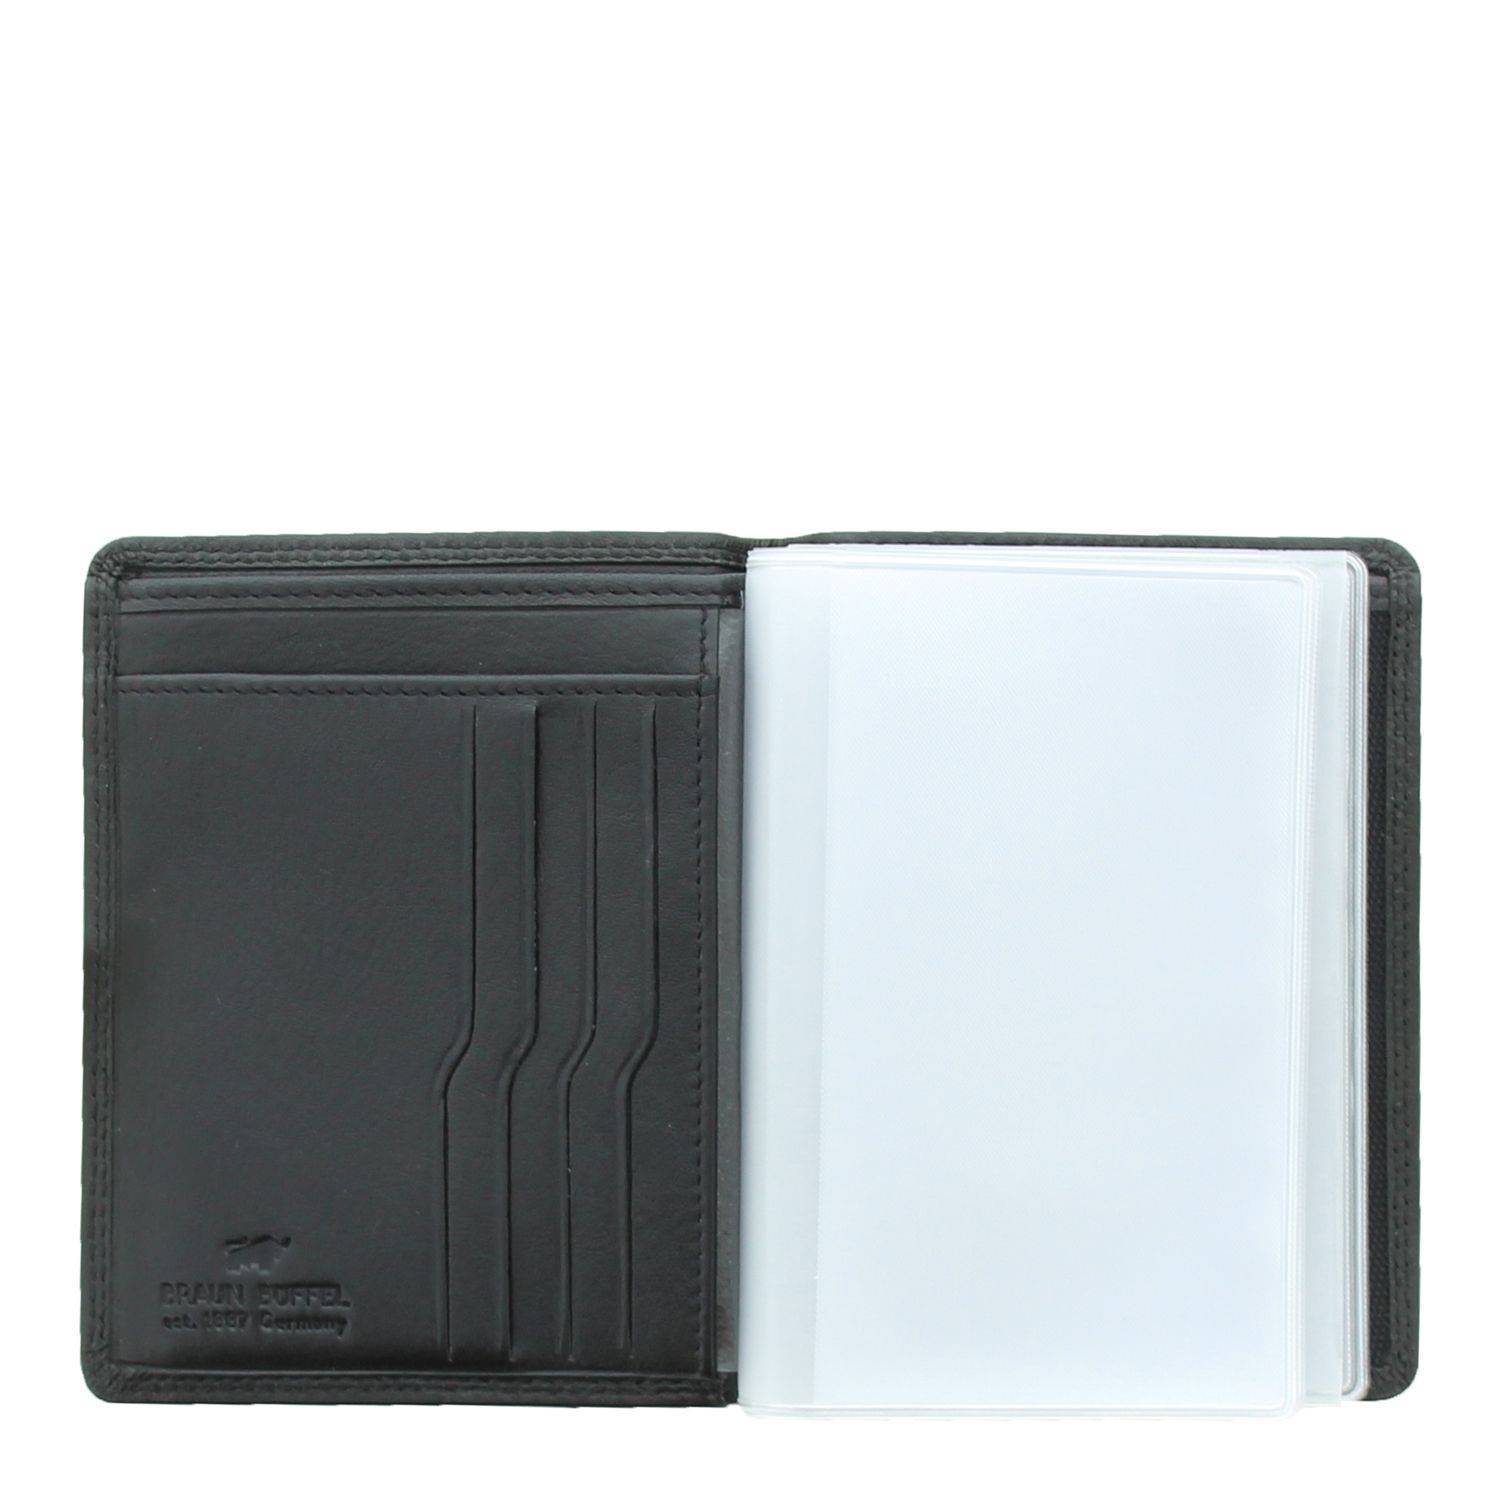 Чехол для кредитных карт Braun Buffel GOLF 2.0 ID Card Holder 4CS 90448, цвет черный, размер ONE SIZE - фото 2